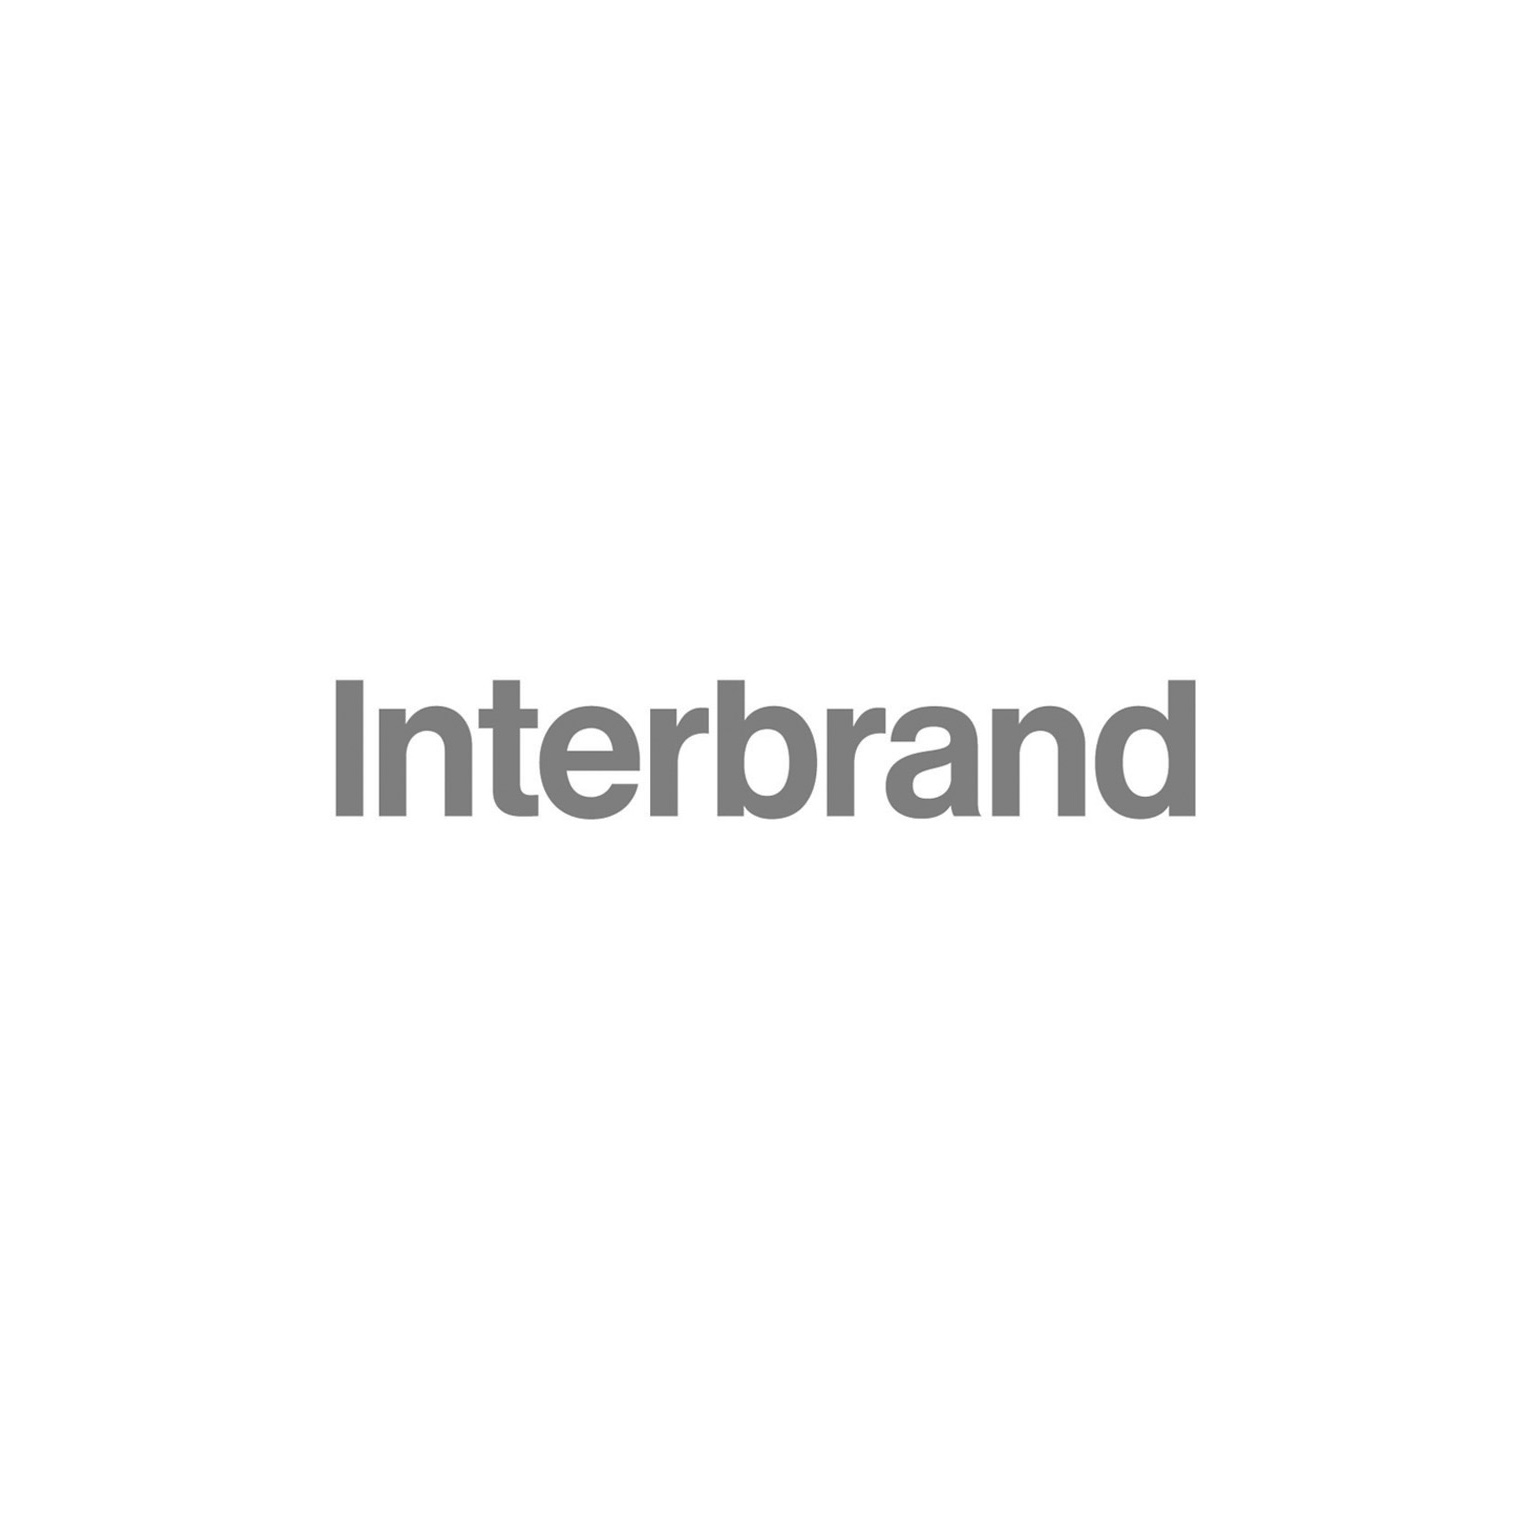 img_partner_logo_interbrand_square.jpg